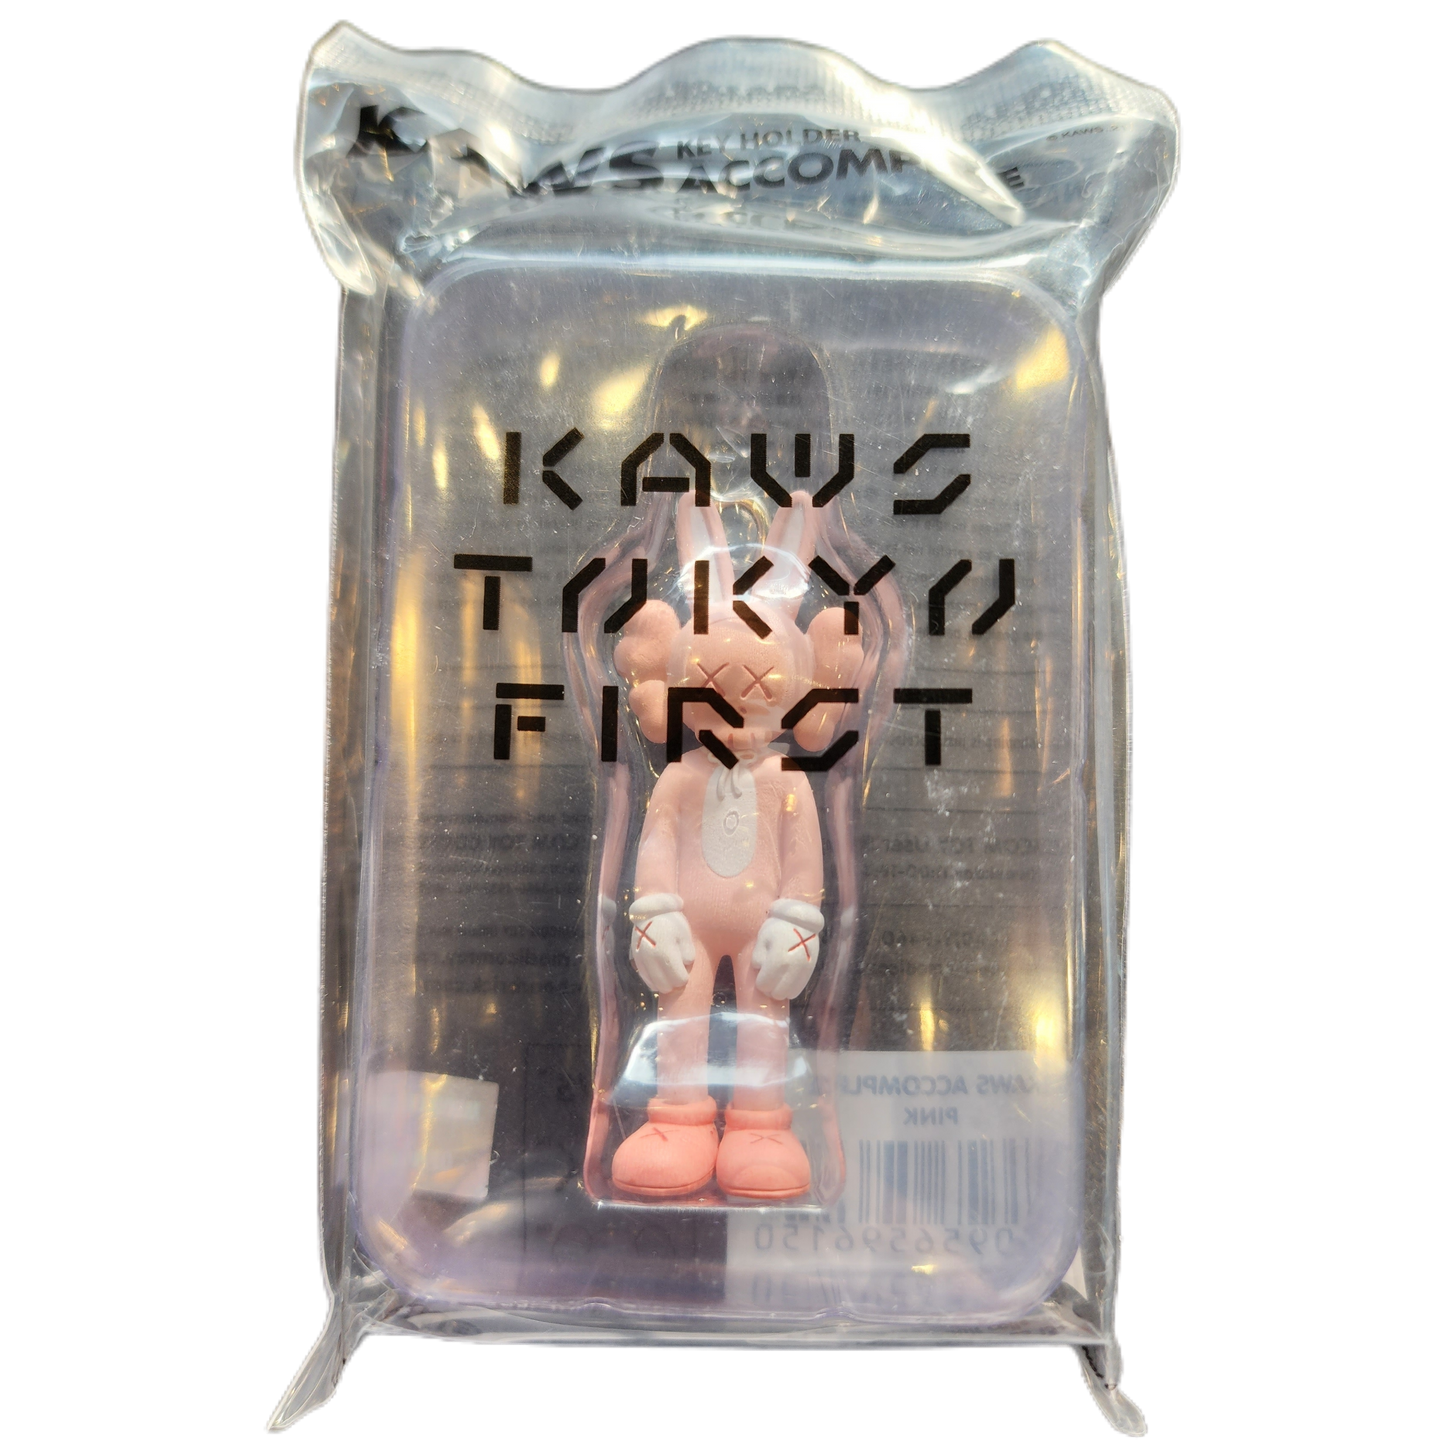 Kaws - "Tokyo First Accomplice" - Keychain